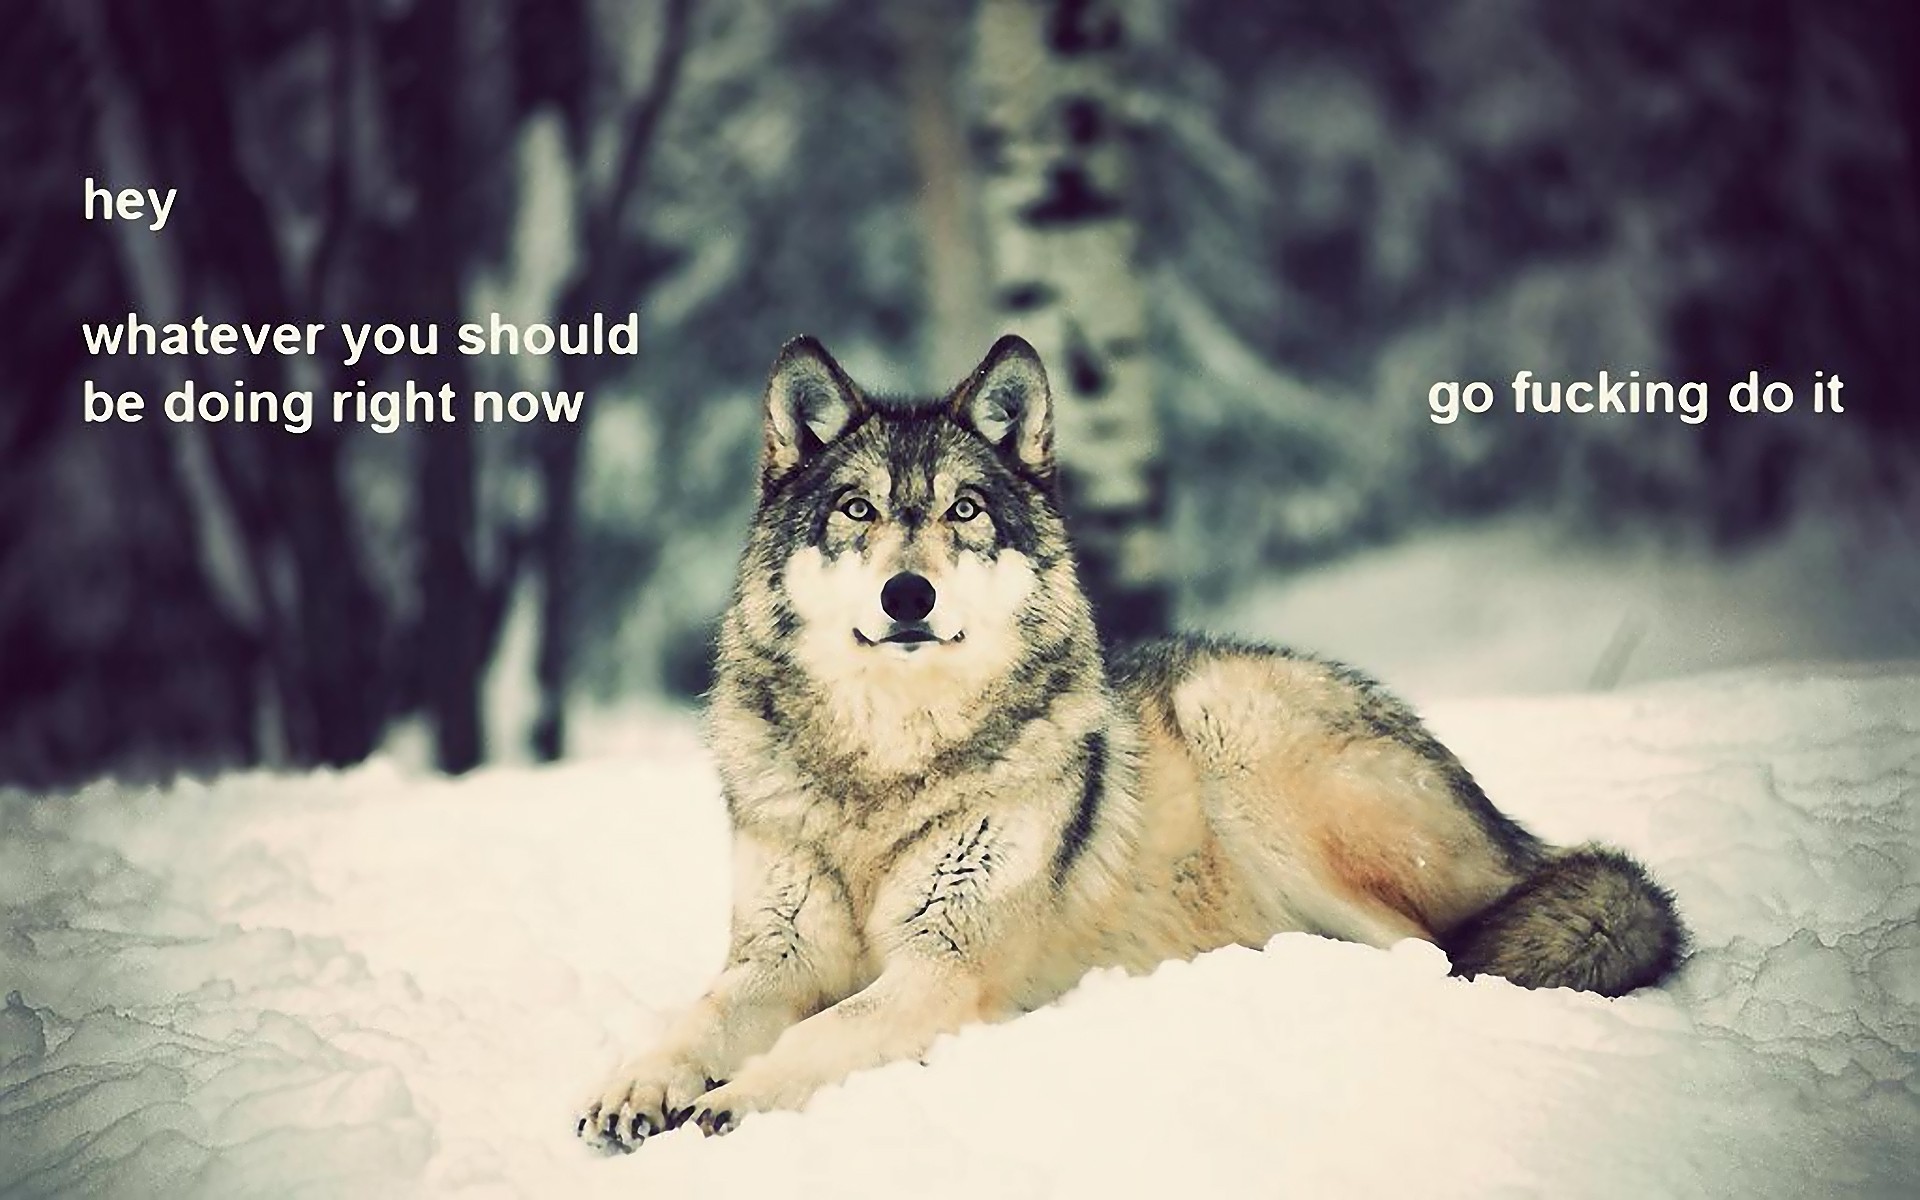 General 1920x1200 fuckscape quote text wolf snow forest nature animals mammals motivational digital art